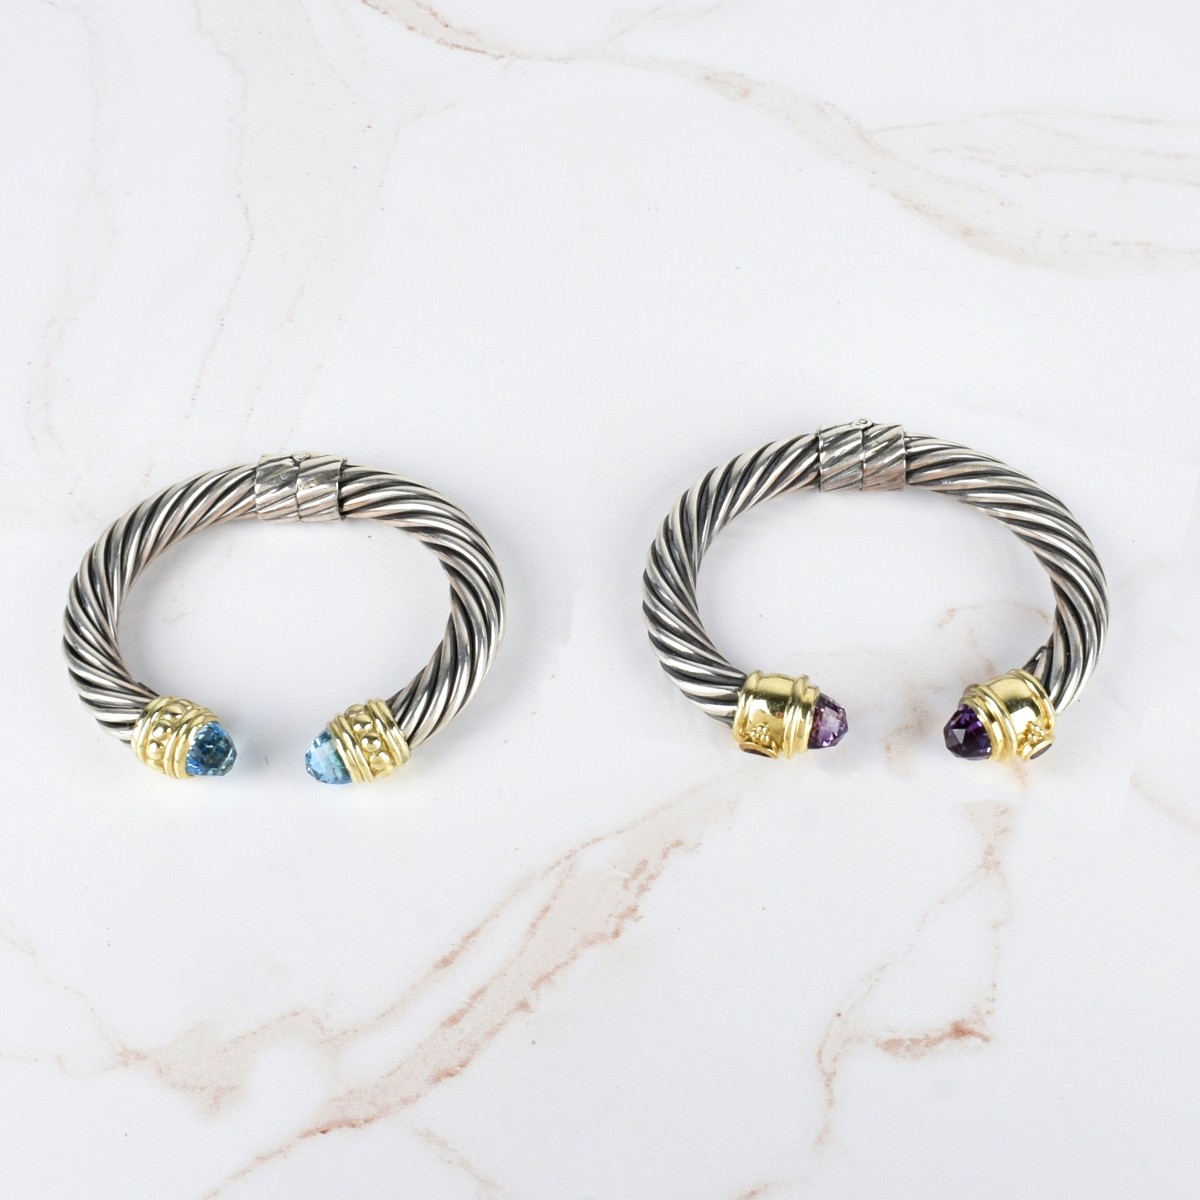 Gemstone, 14K and Silver Bangle Bracelets